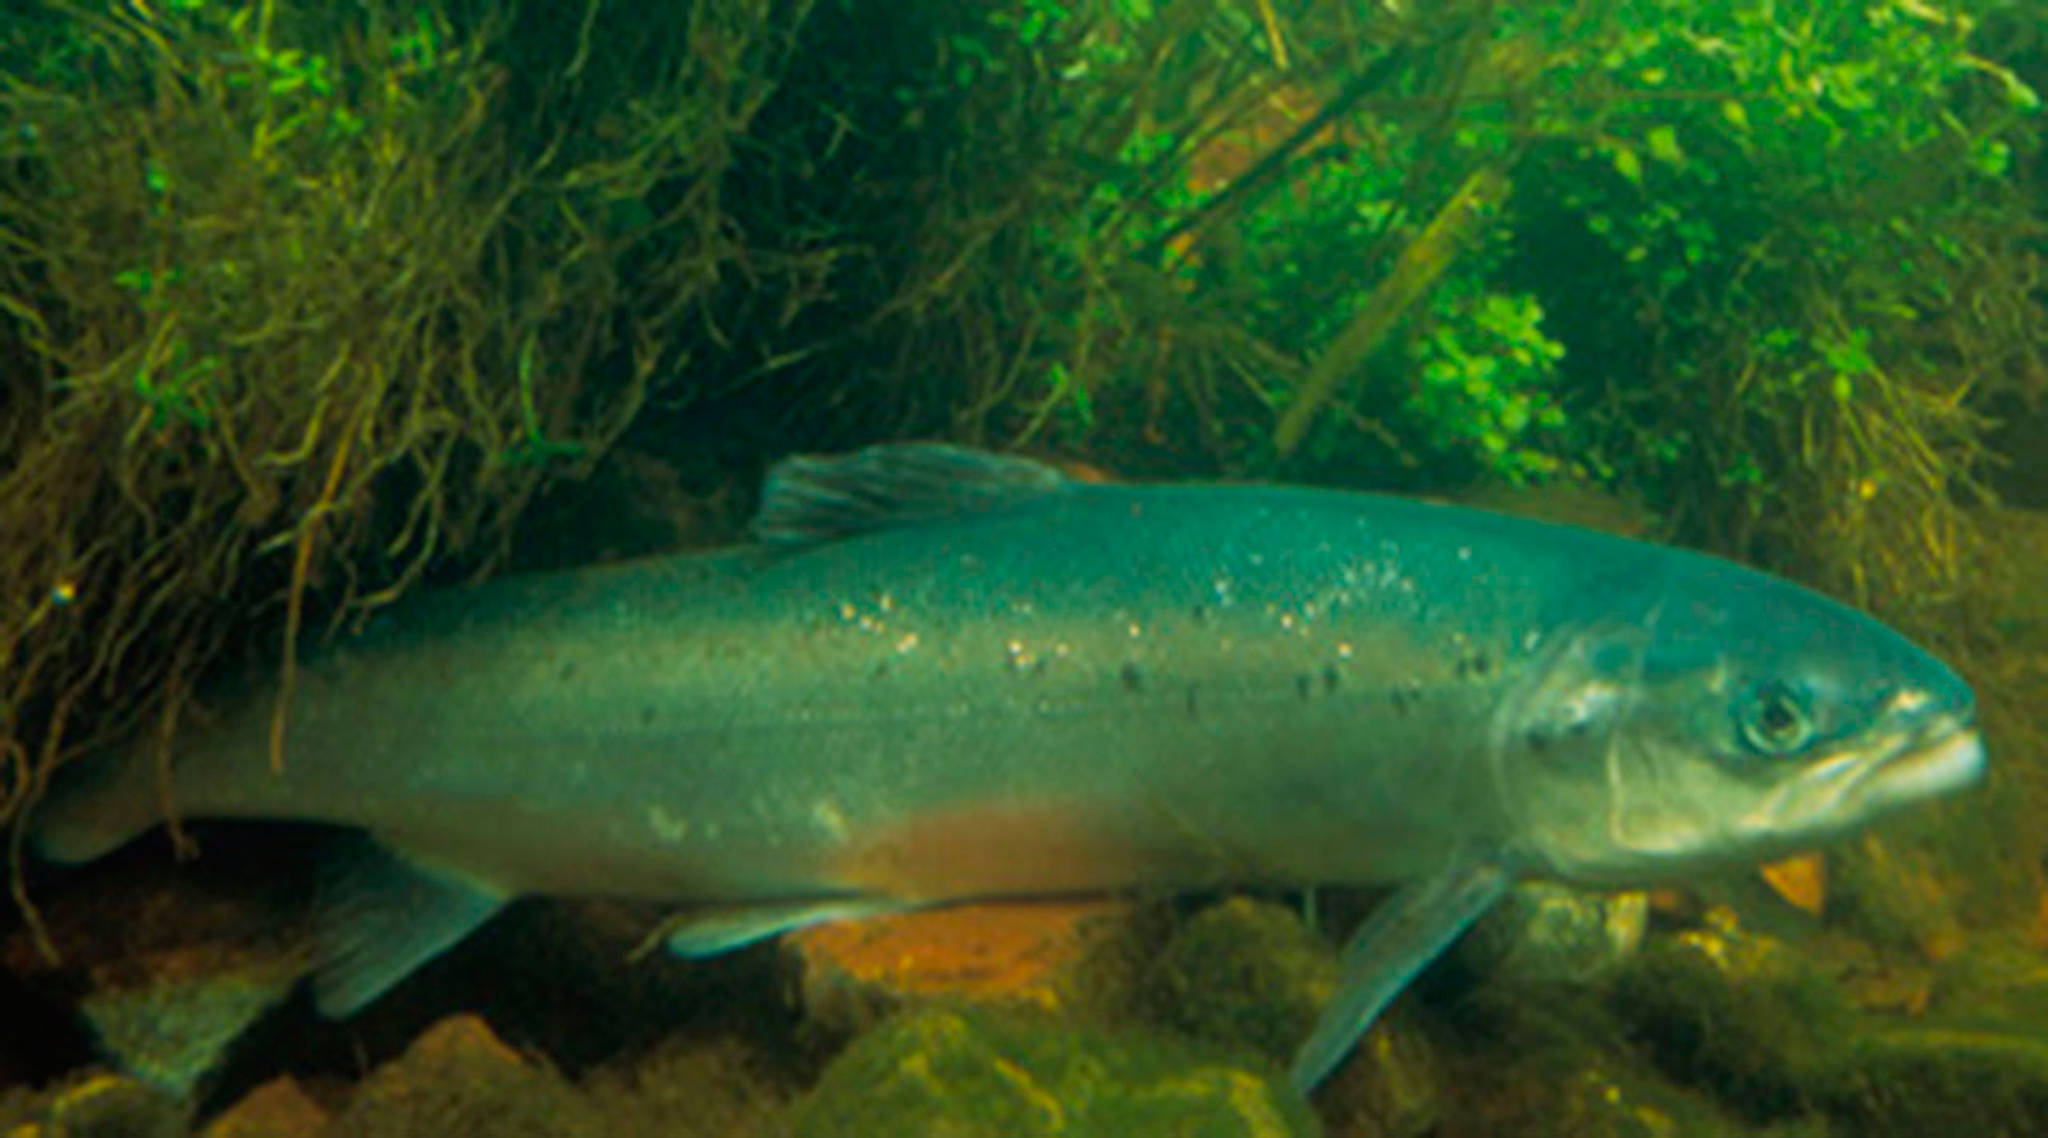 State updates permits to regulate Atlantic salmon farming until 2022 ban